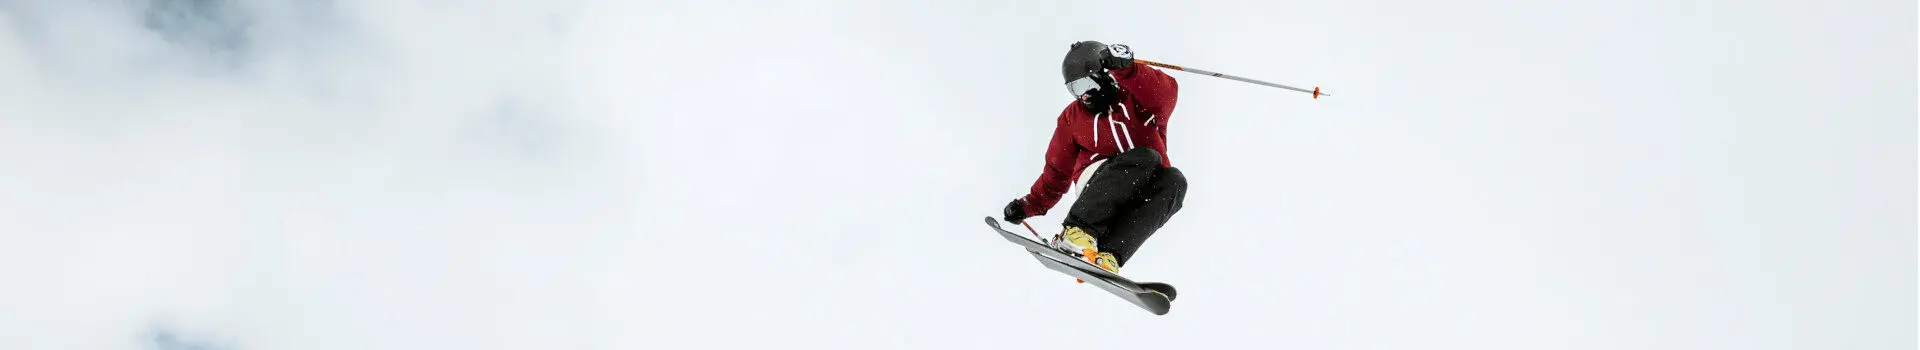 Skier making an incredible jump